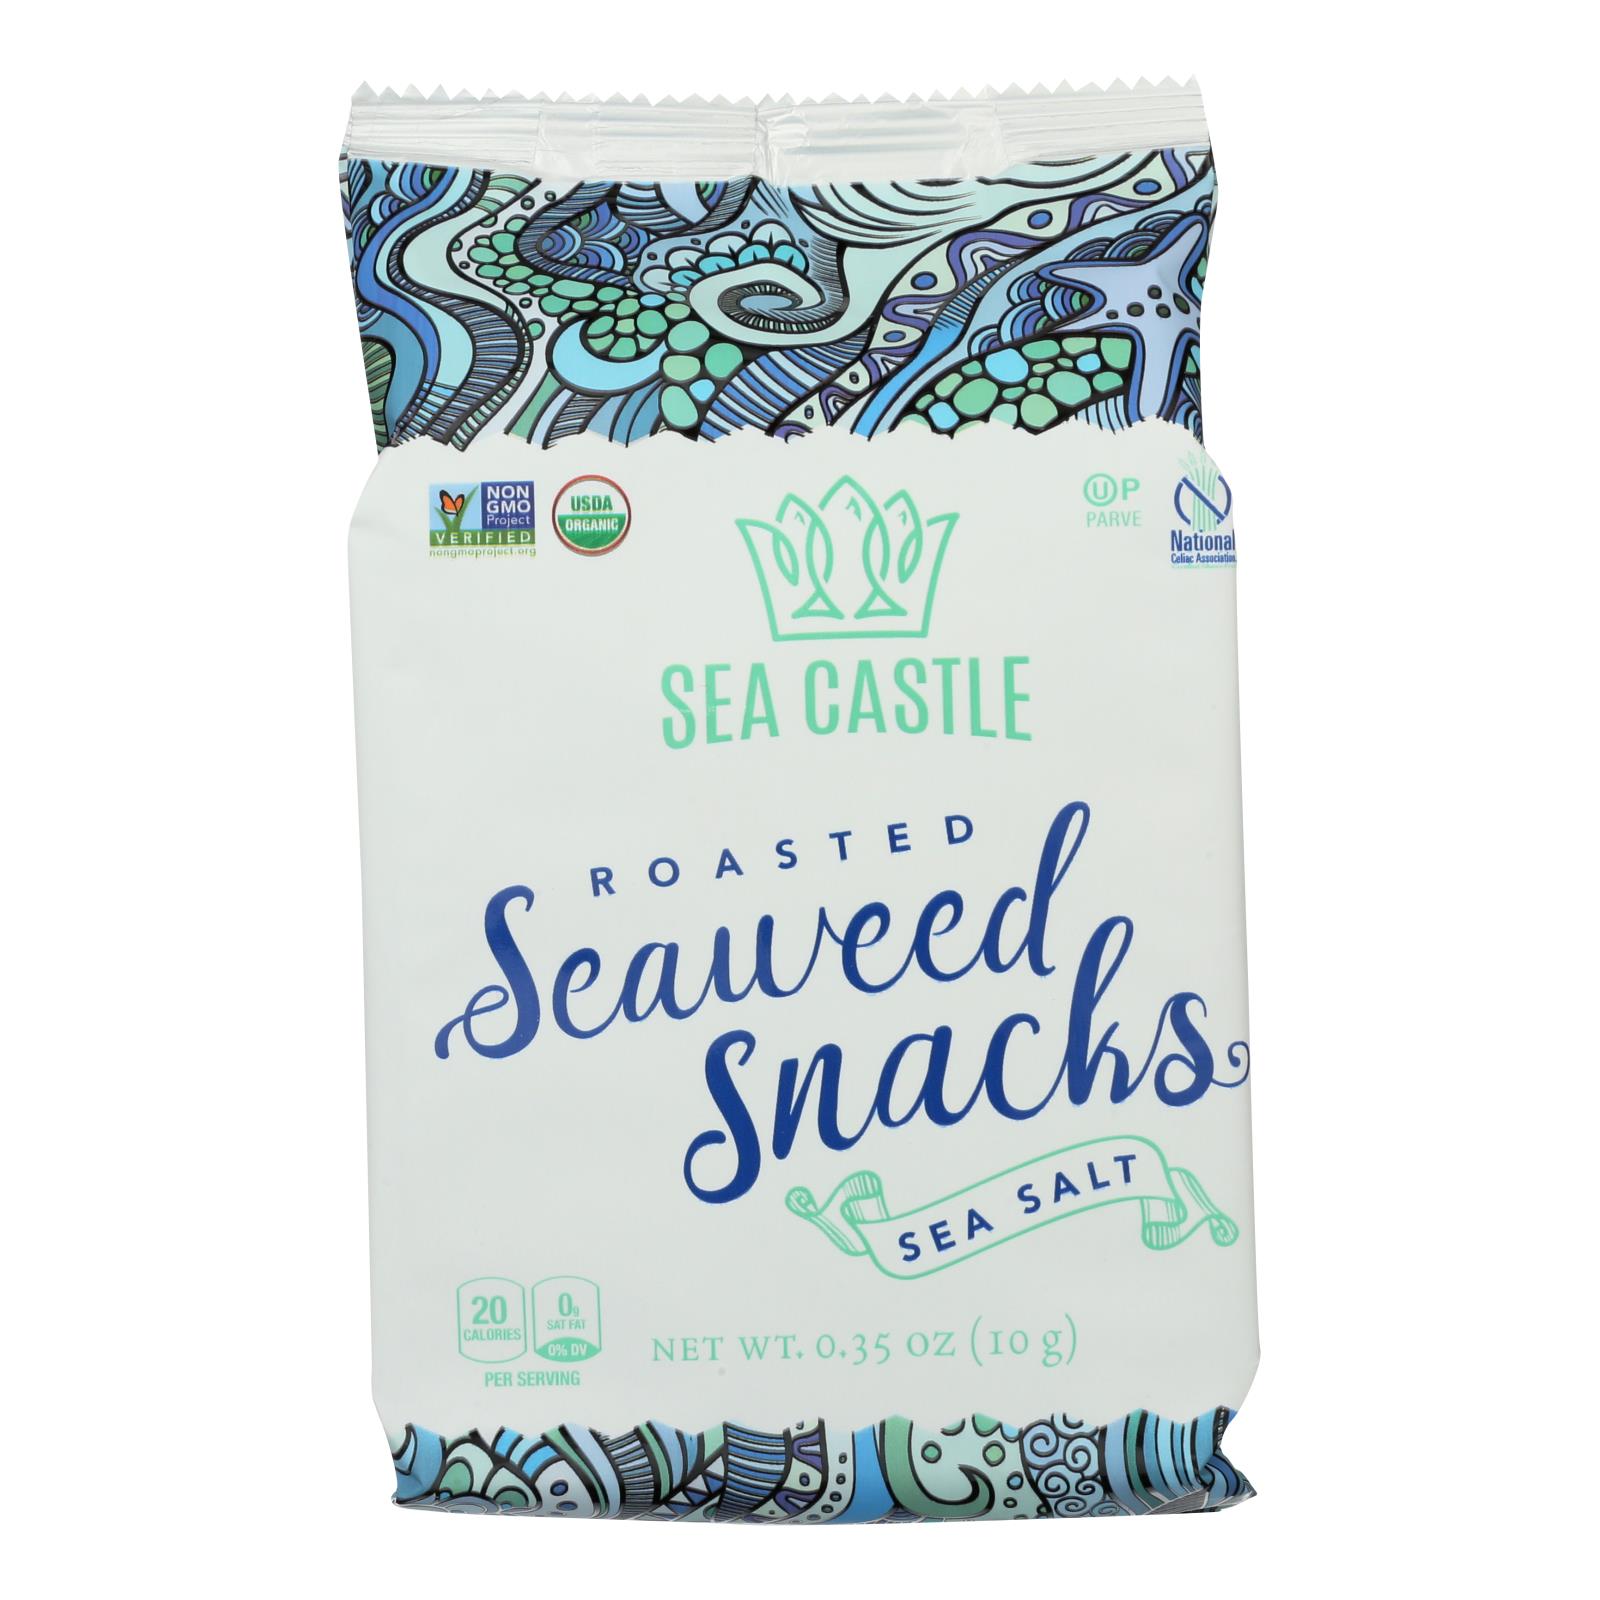 Sea Castle Roasted Seaweed Snacks - 12개 묶음상품 - .35 OZ